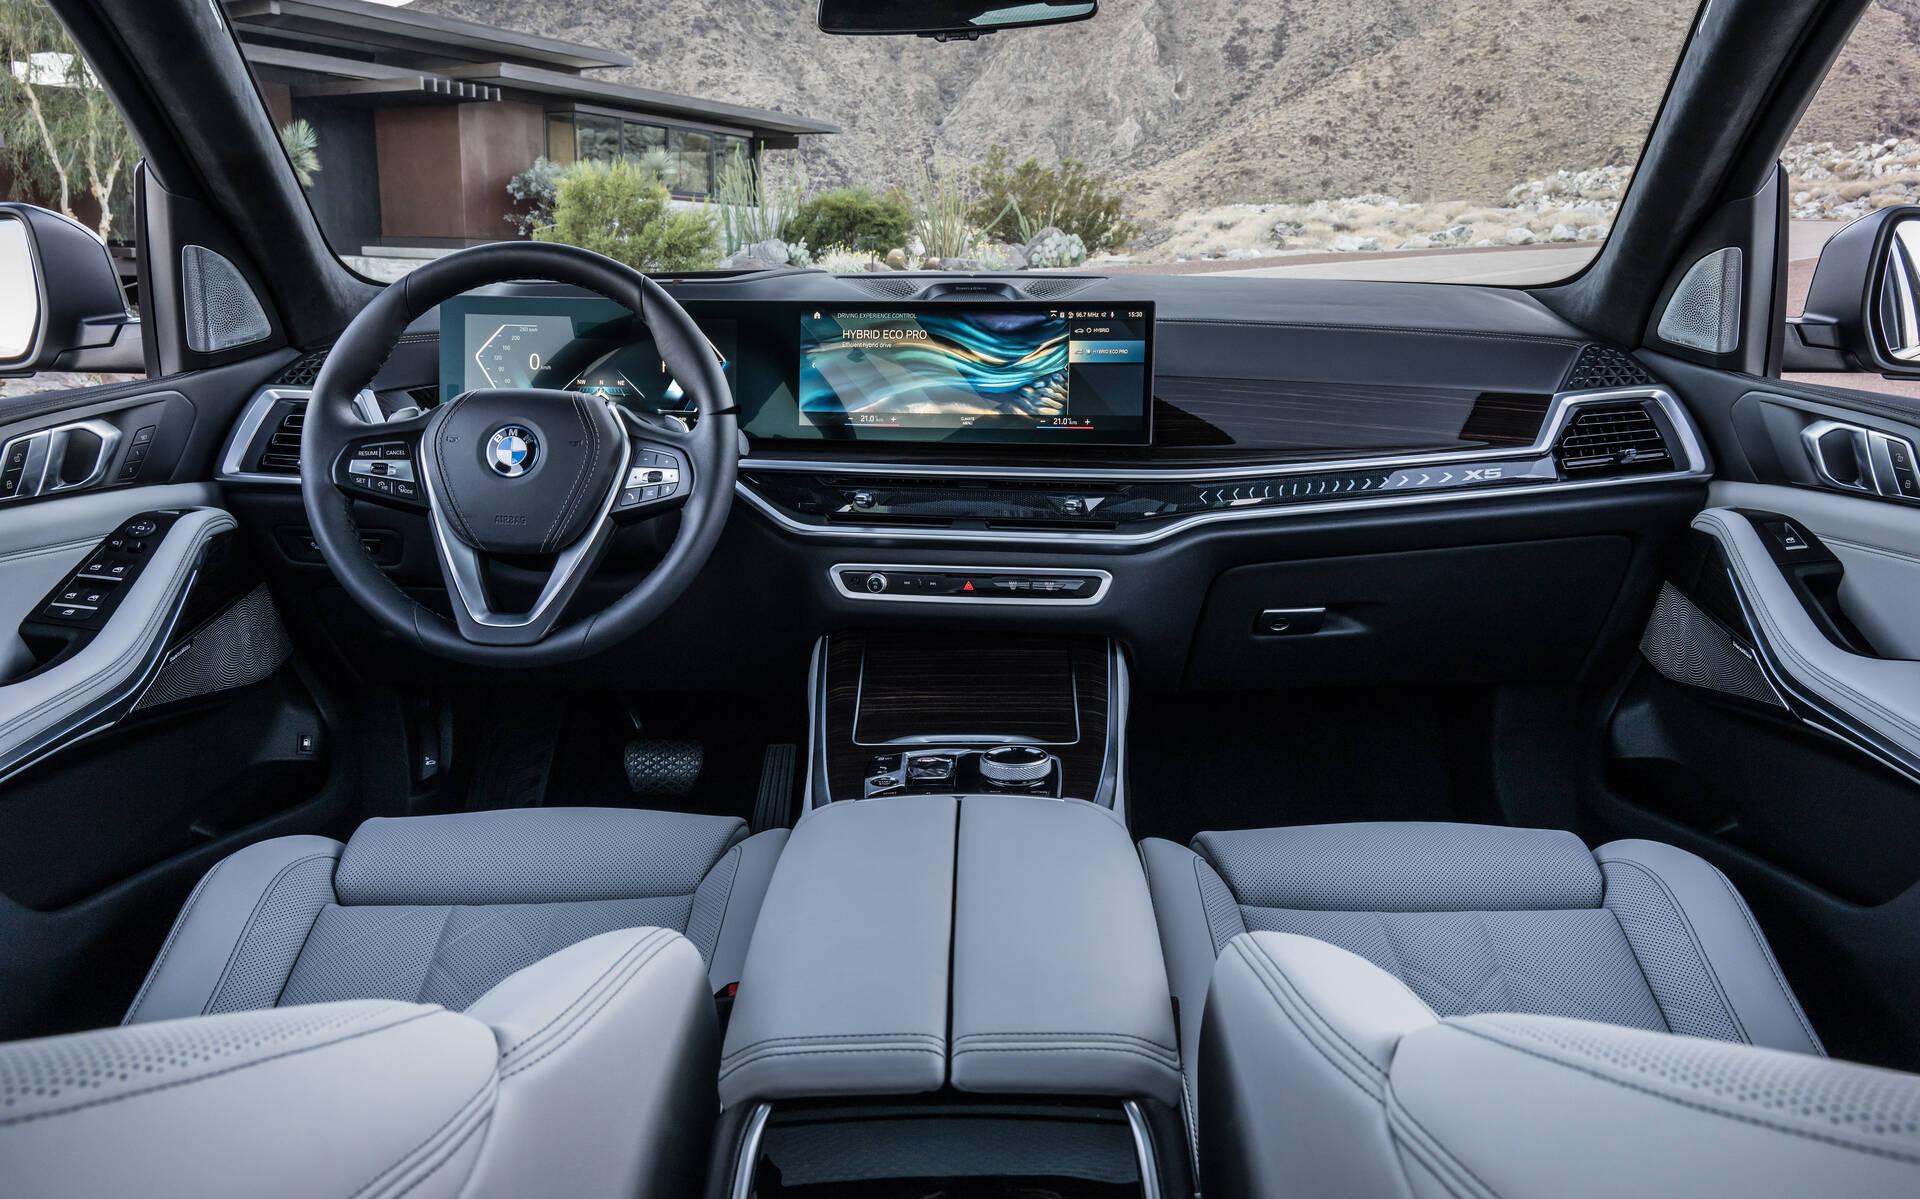  BMW X5 X6 Get Fresh Styling More Power Longer EV Range